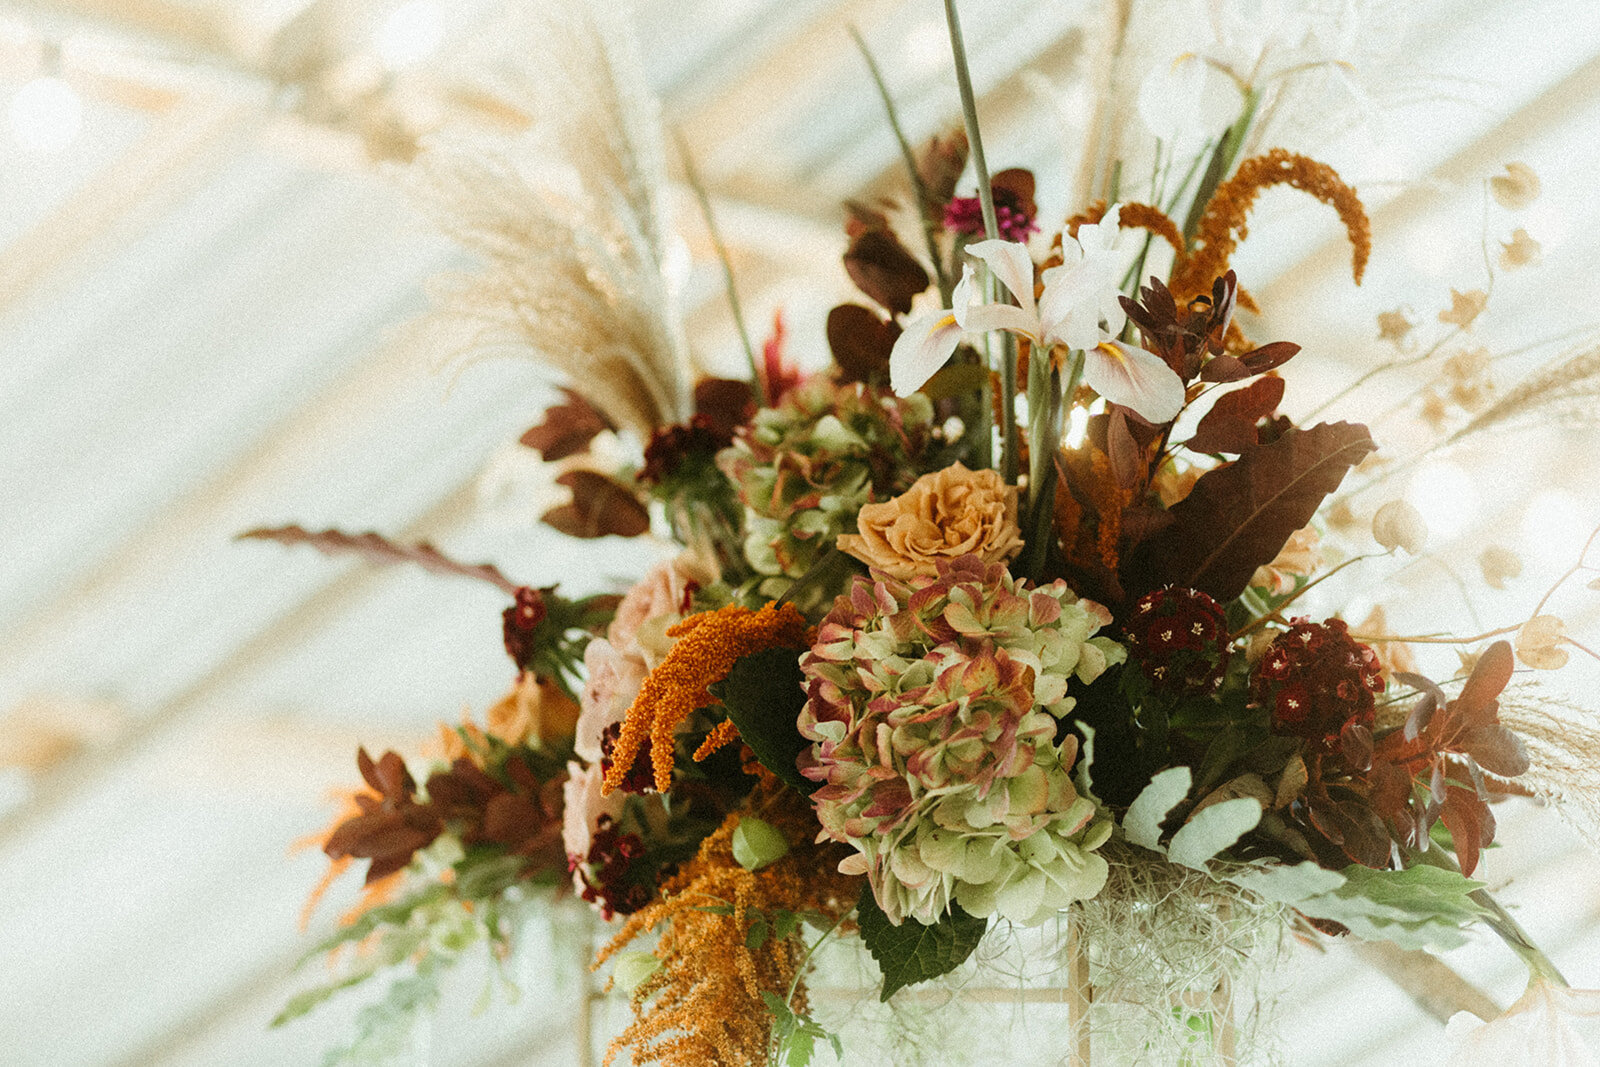 Botanica-greenhouse wedding-louisville wedding florist-fall wedding-dreamy flowers.jpg